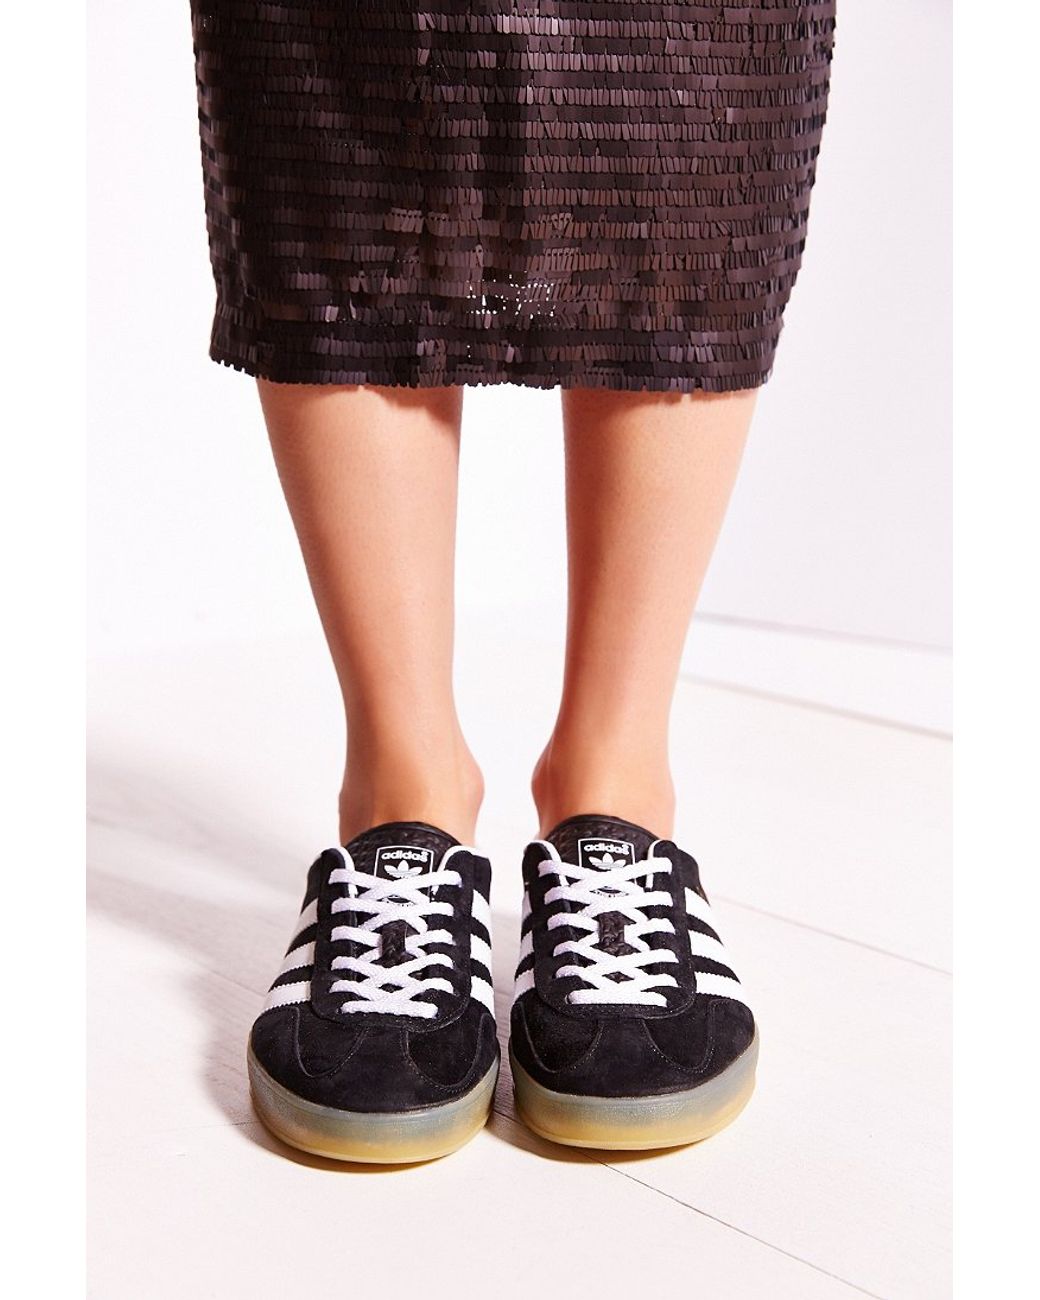 adidas Originals Gazelle Gum-Sole Indoor Sneaker in Black | Lyst